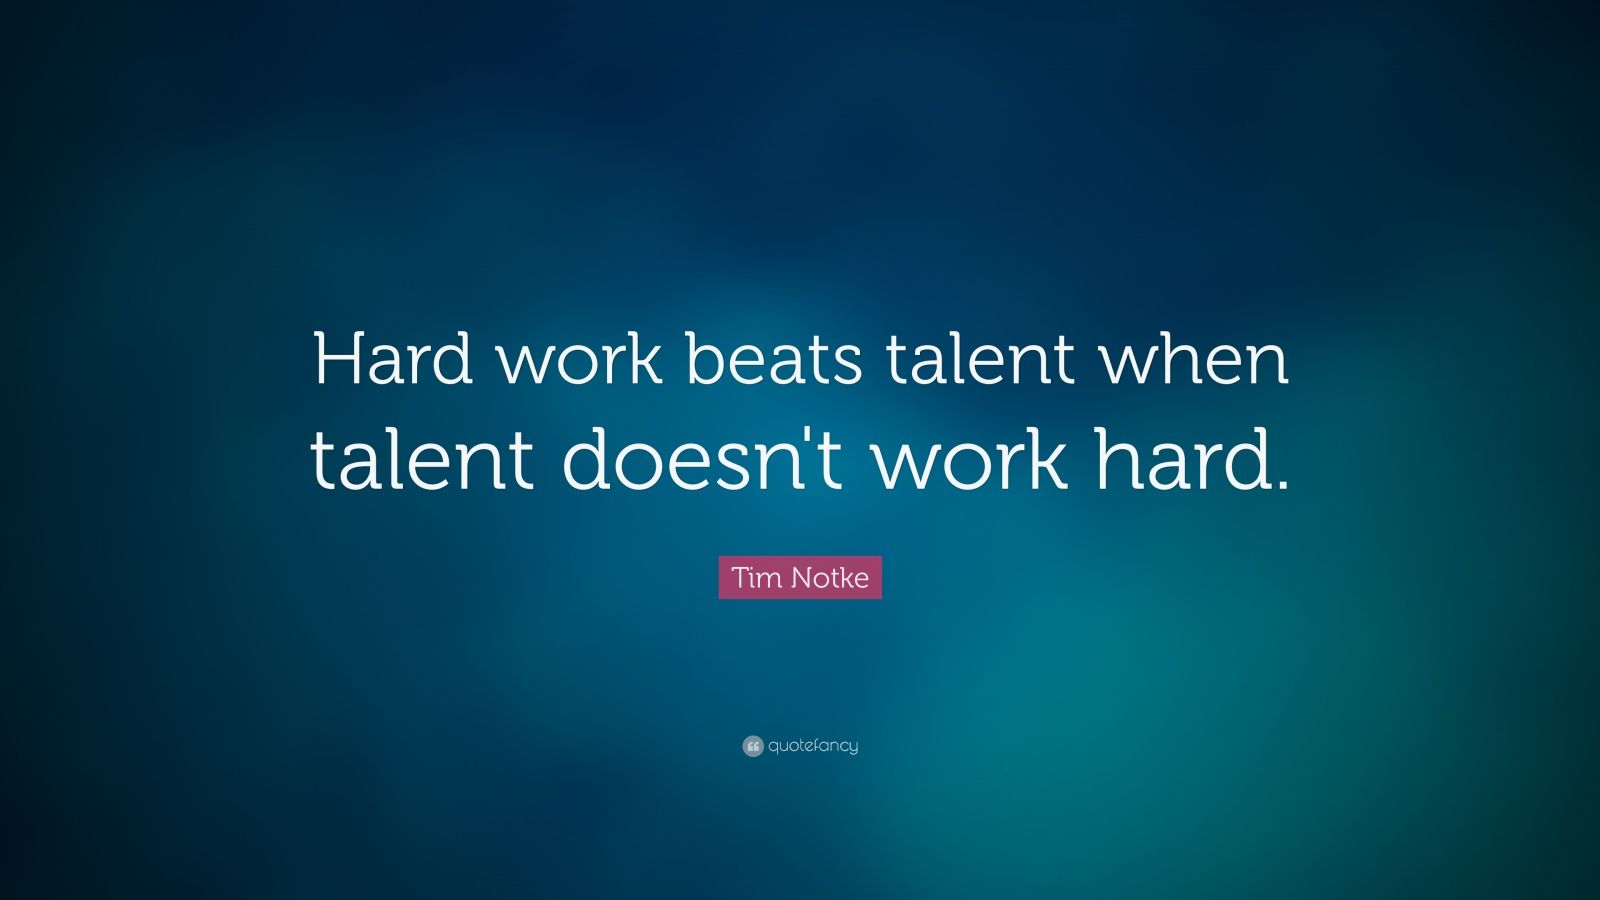 Tim Notke Quote: “Hard work beats talent when talent doesn't work hard ...